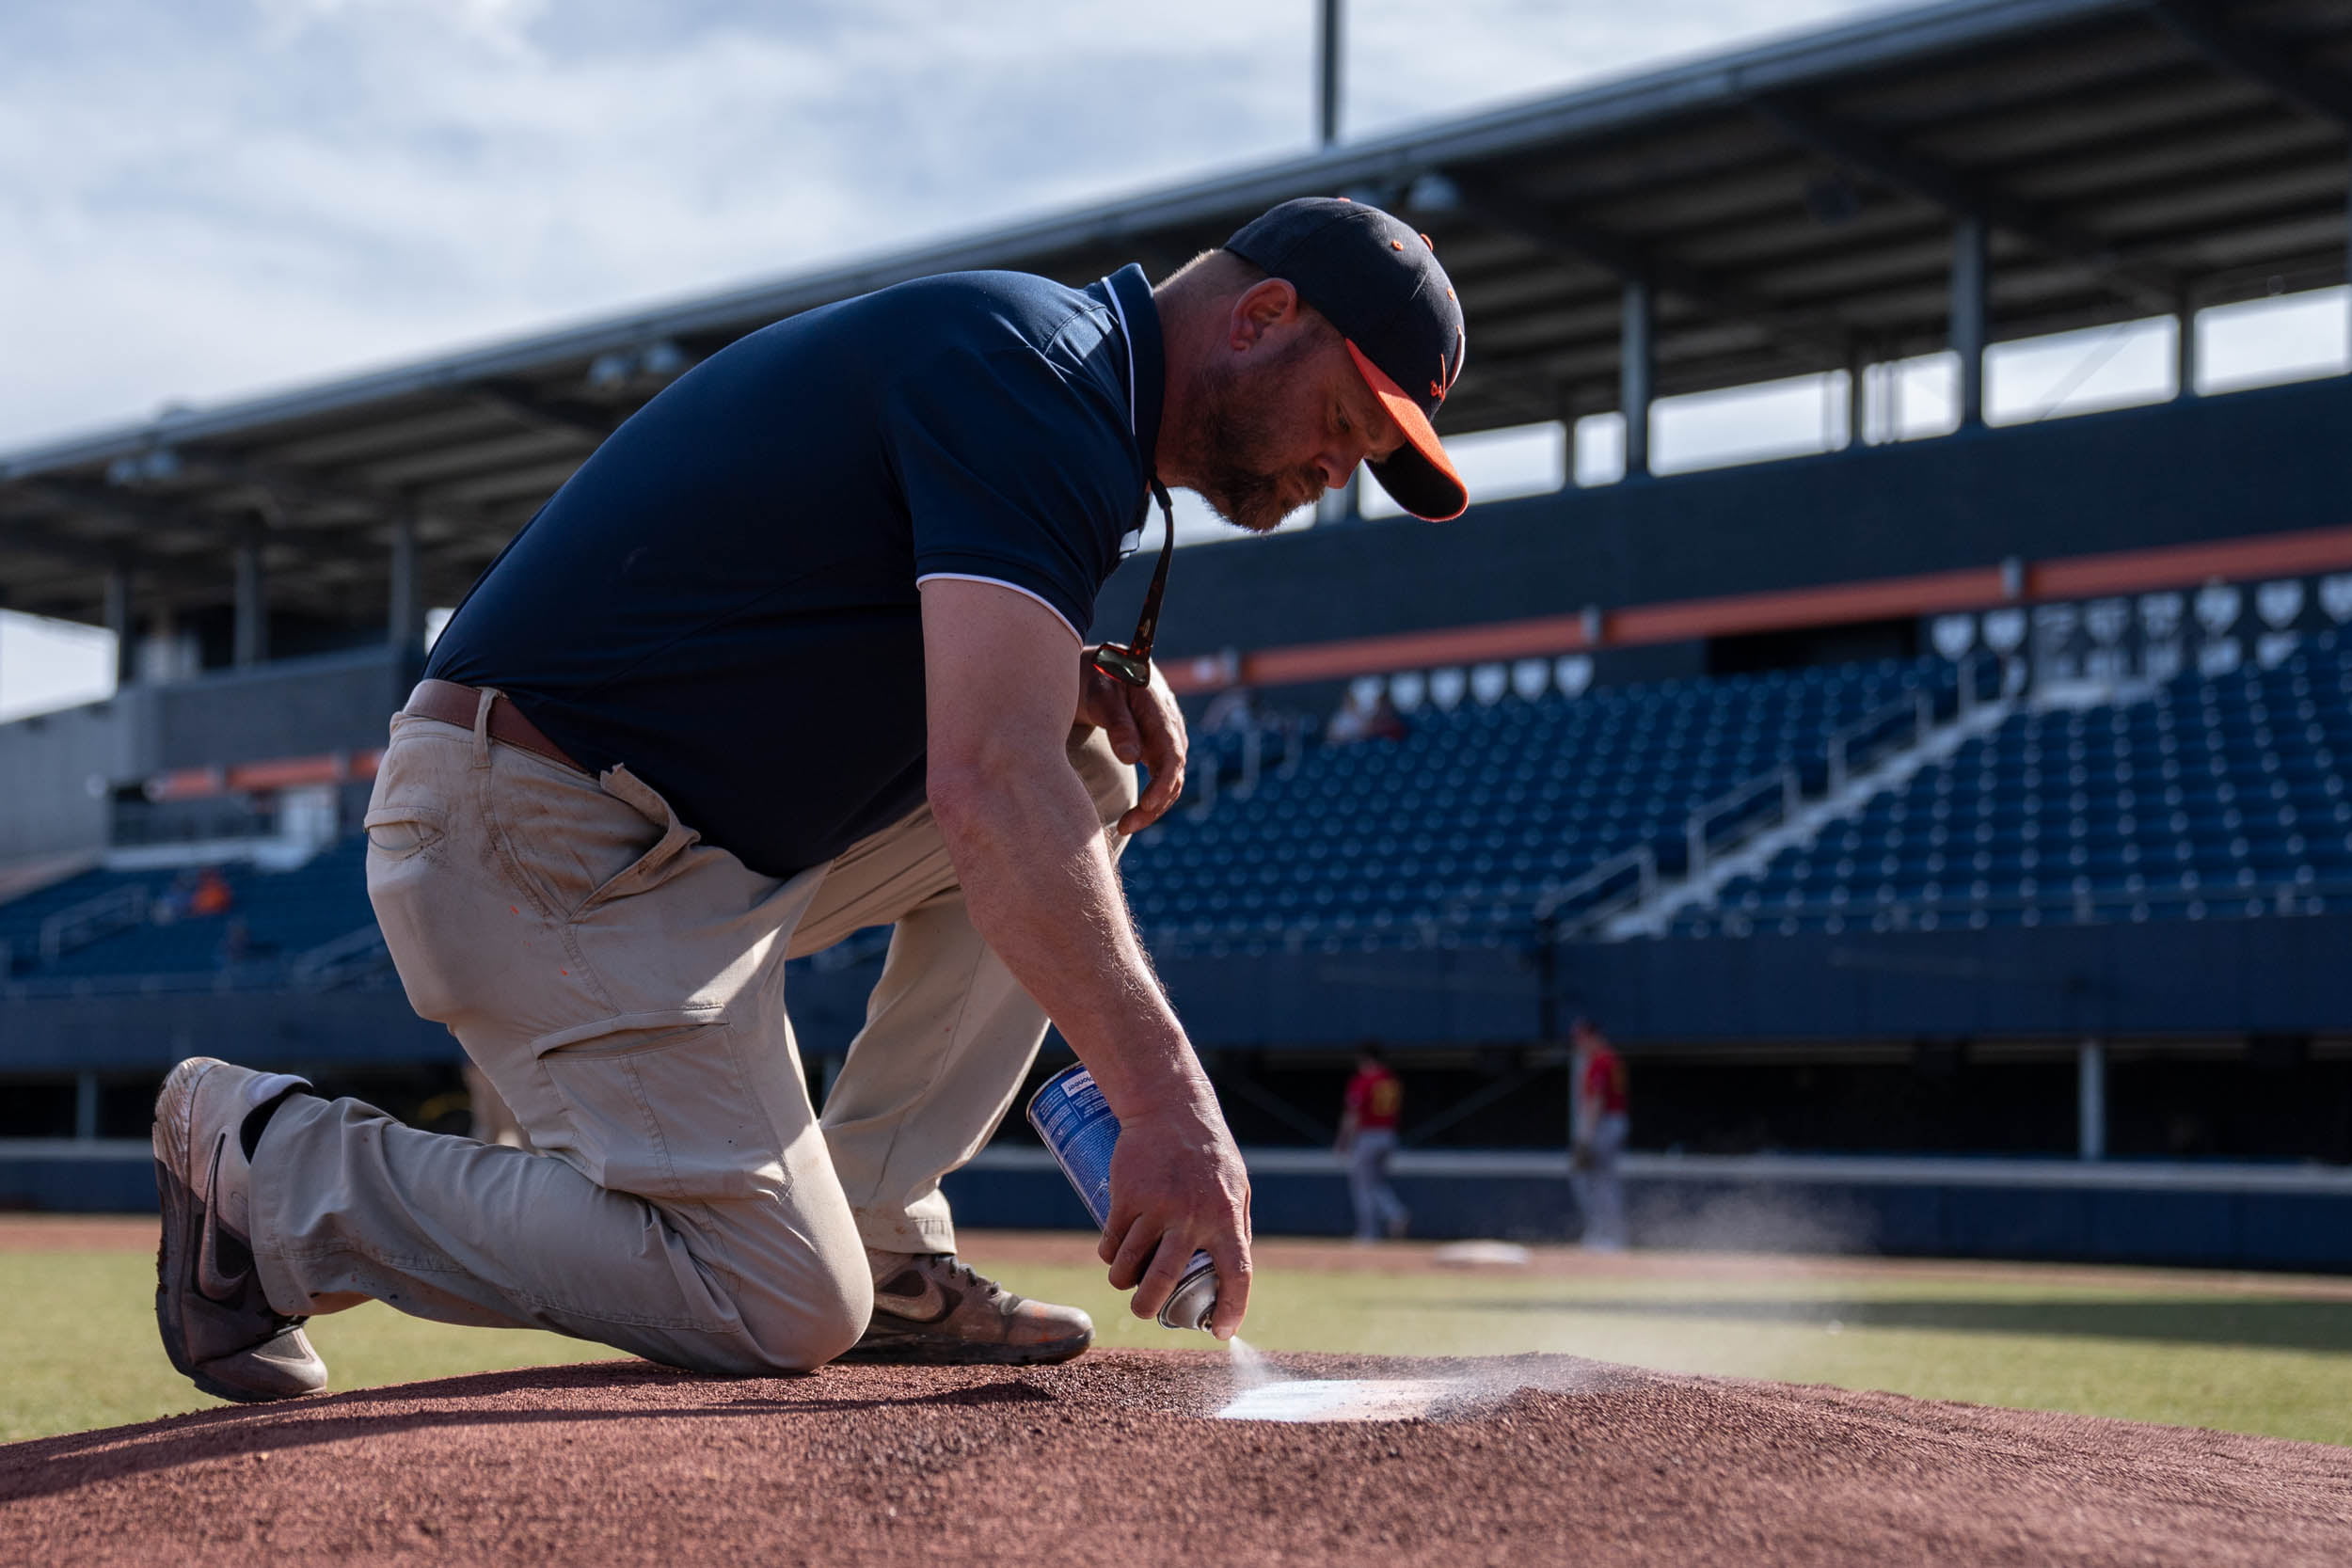 UVA Staff member kneeling down on the pitching mound spraying the mound